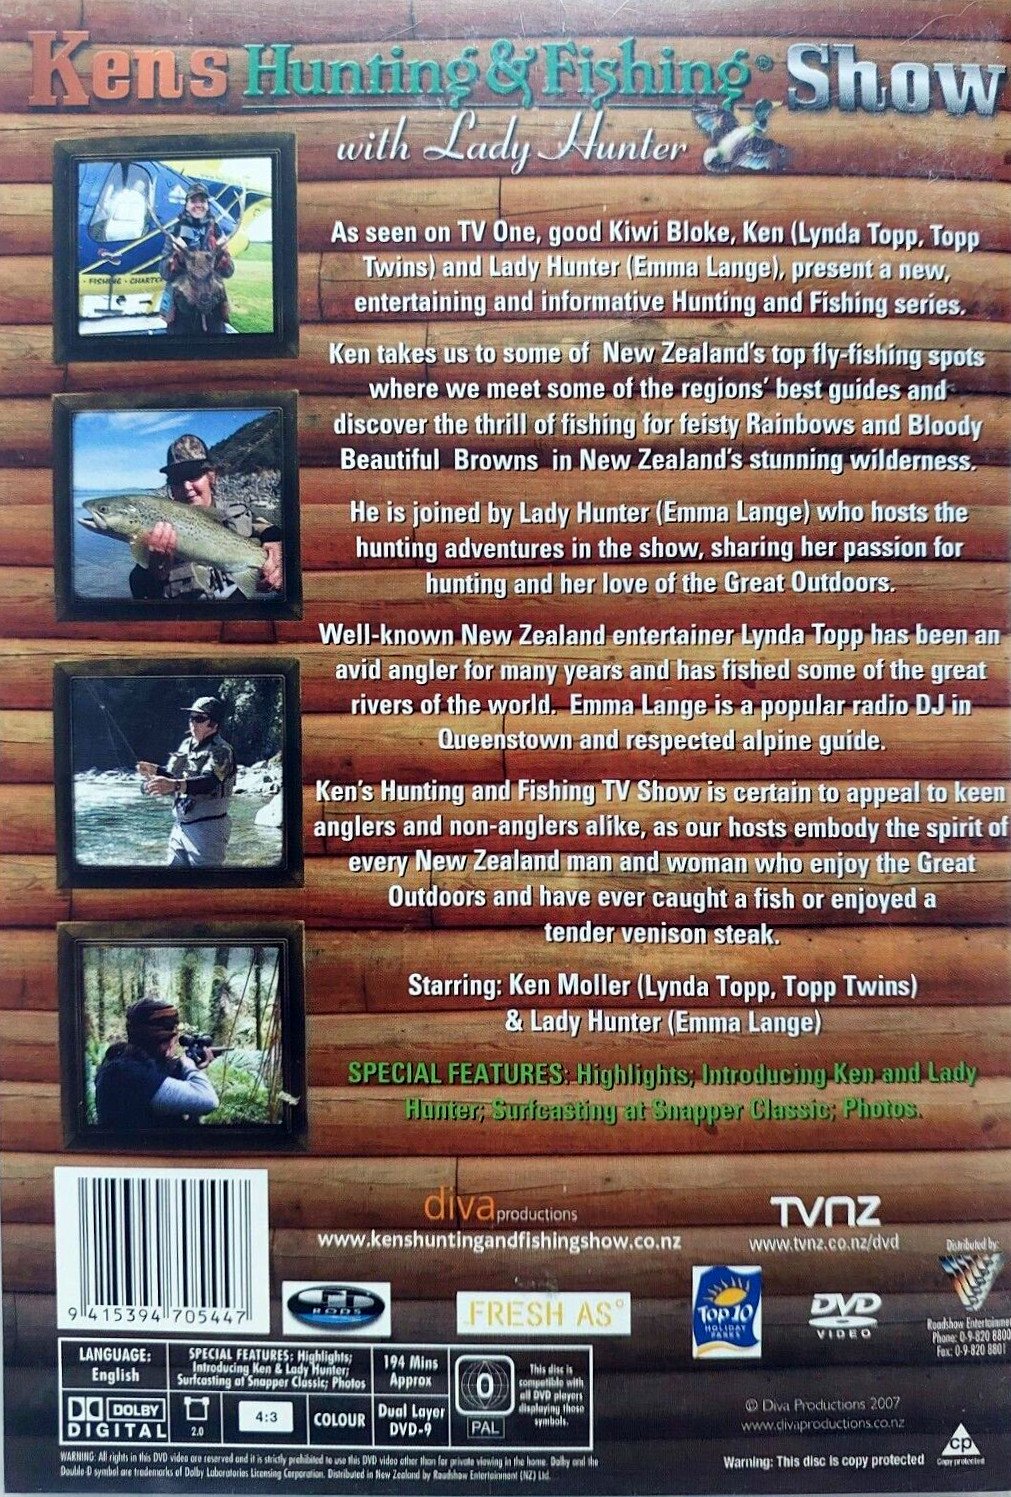 dvd back cover